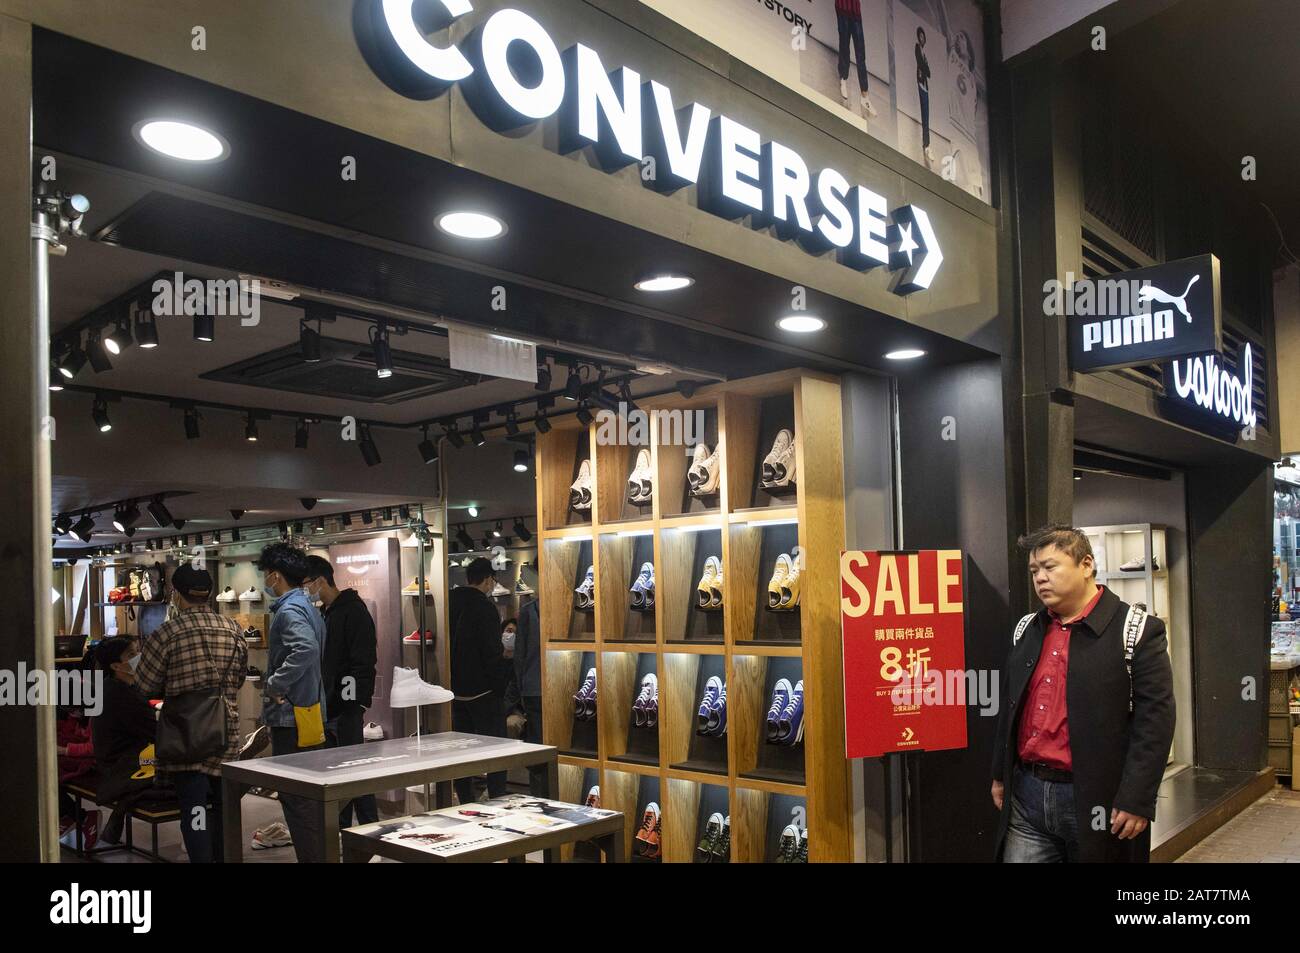 converse shop hk